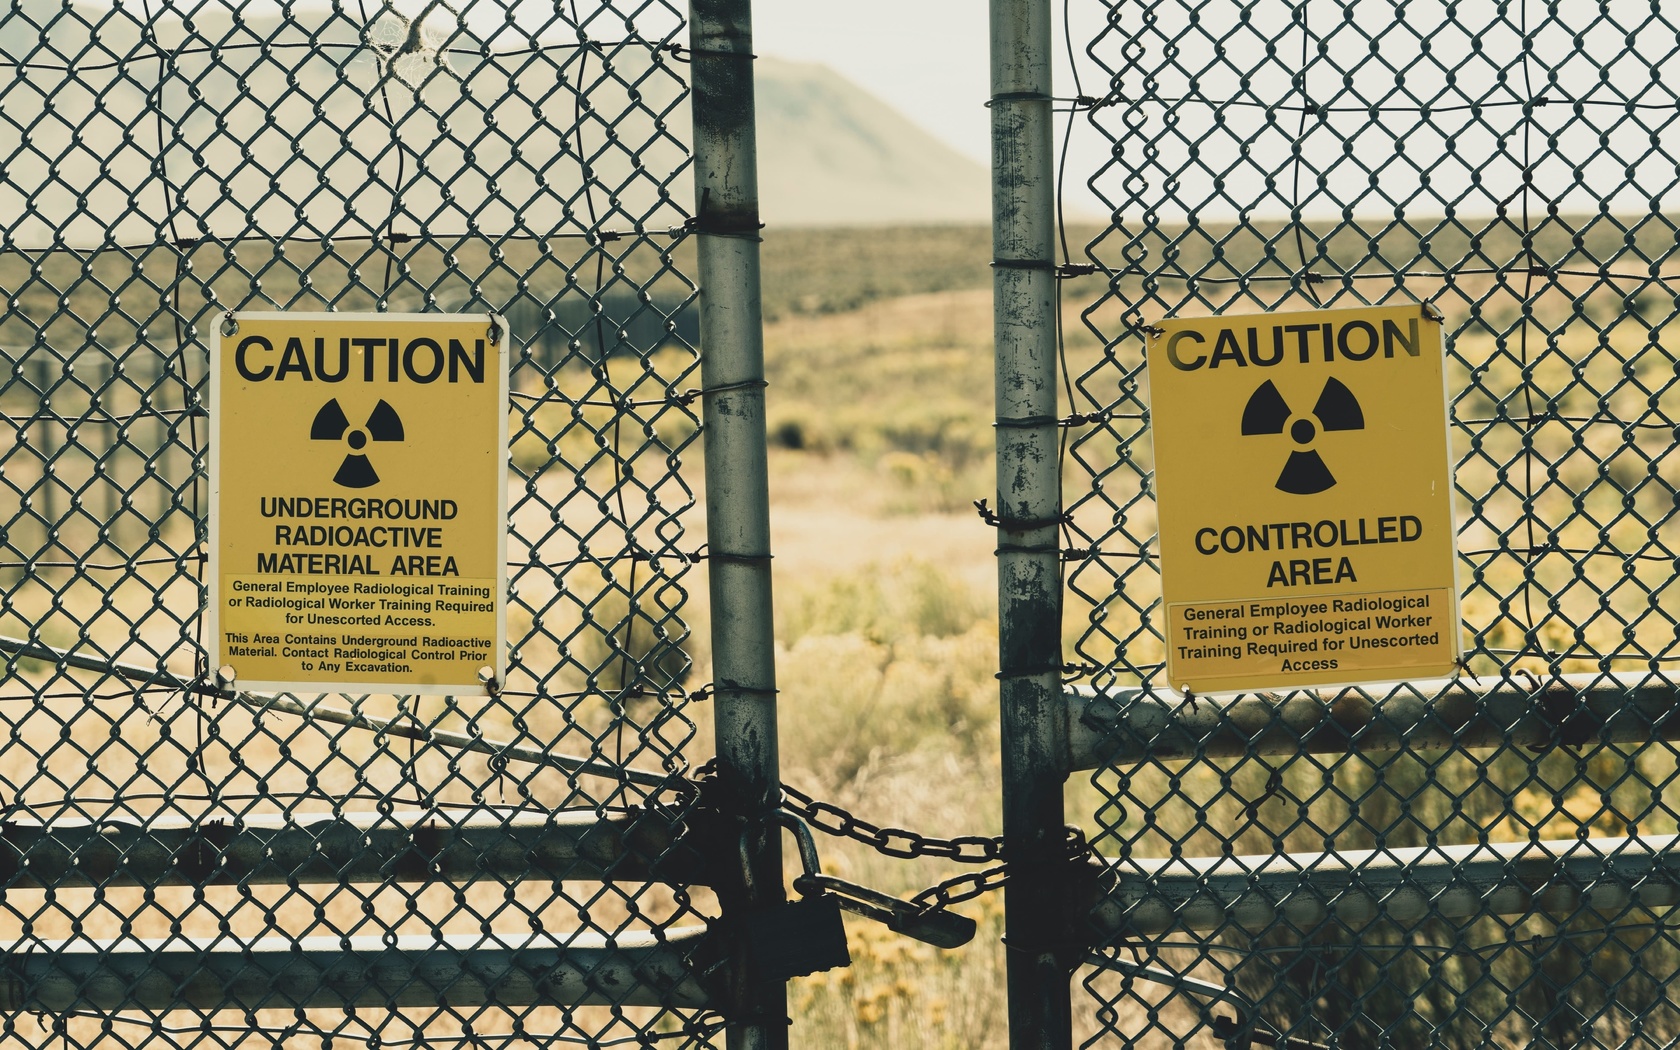 nuclear energy, radioactive waste, caution, idaho, fence, radiation warning signs